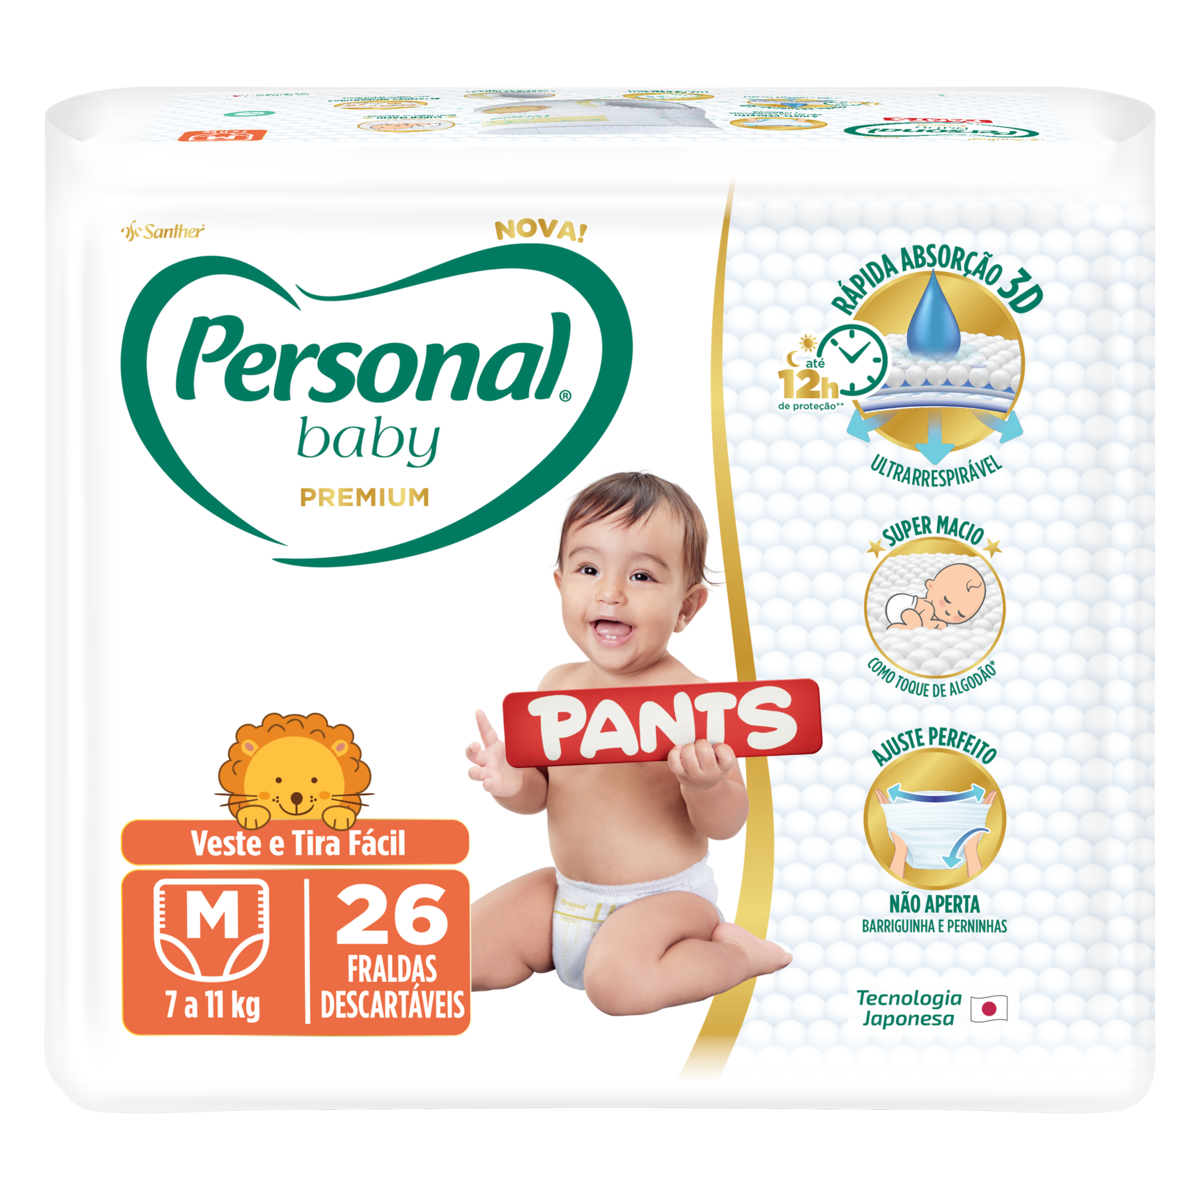 7896110011356 - FRALDA DESCARTÁVEL PANTS PERSONAL BABY PREMIUM M PACOTE 26 UNIDADES